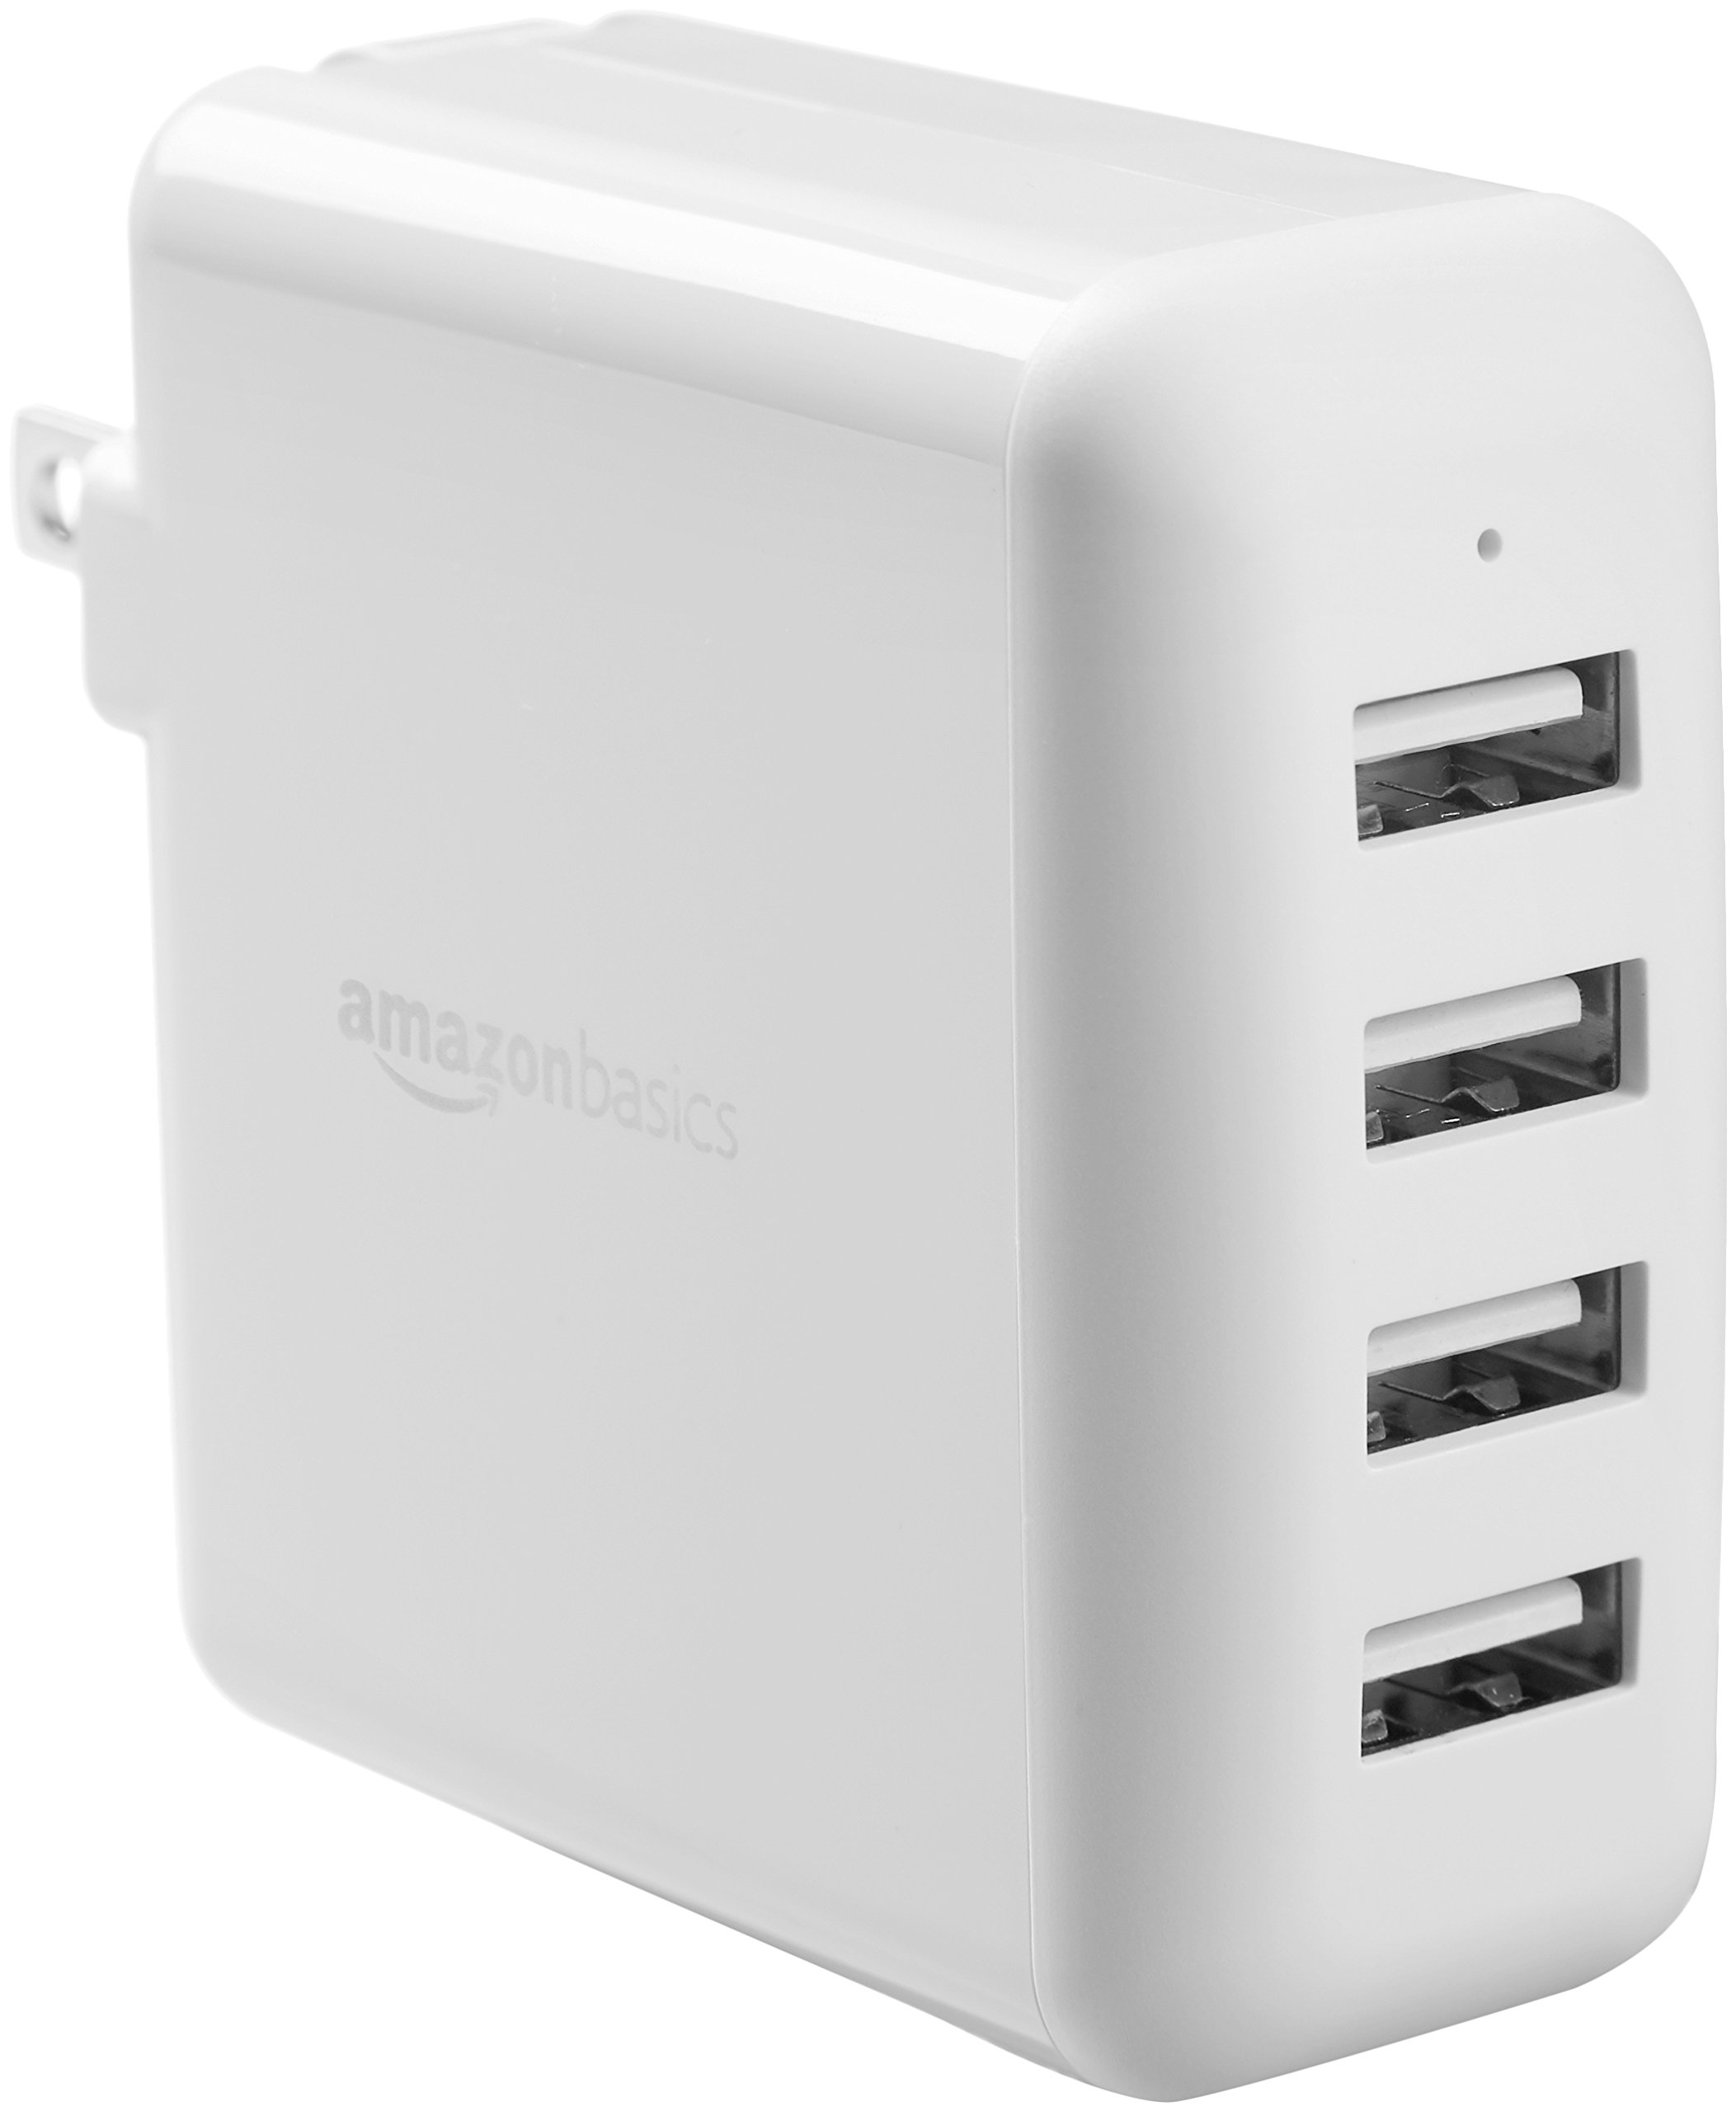 Book Cover AmazonBasics 40W 4-Port USB Wall Charger - White White 4 Port